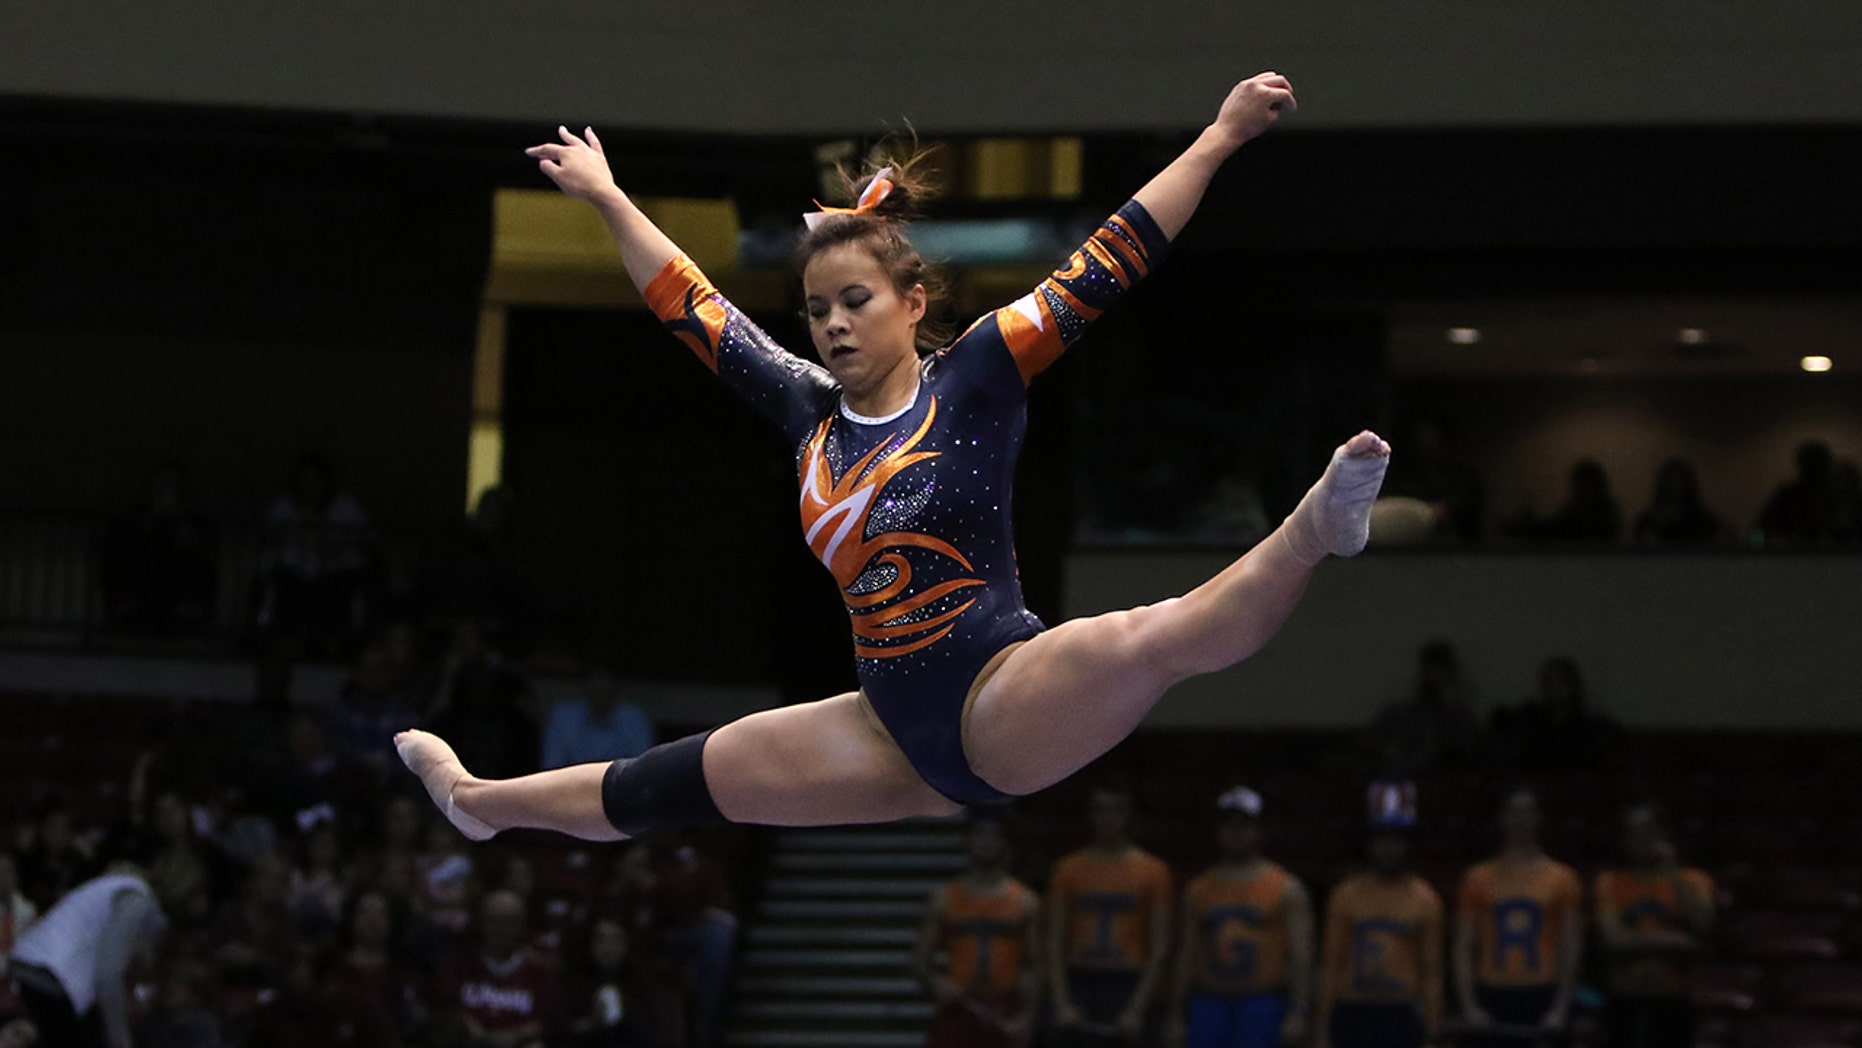 Auburn University Senior Gymnast Suffers Devastating Leg Injury